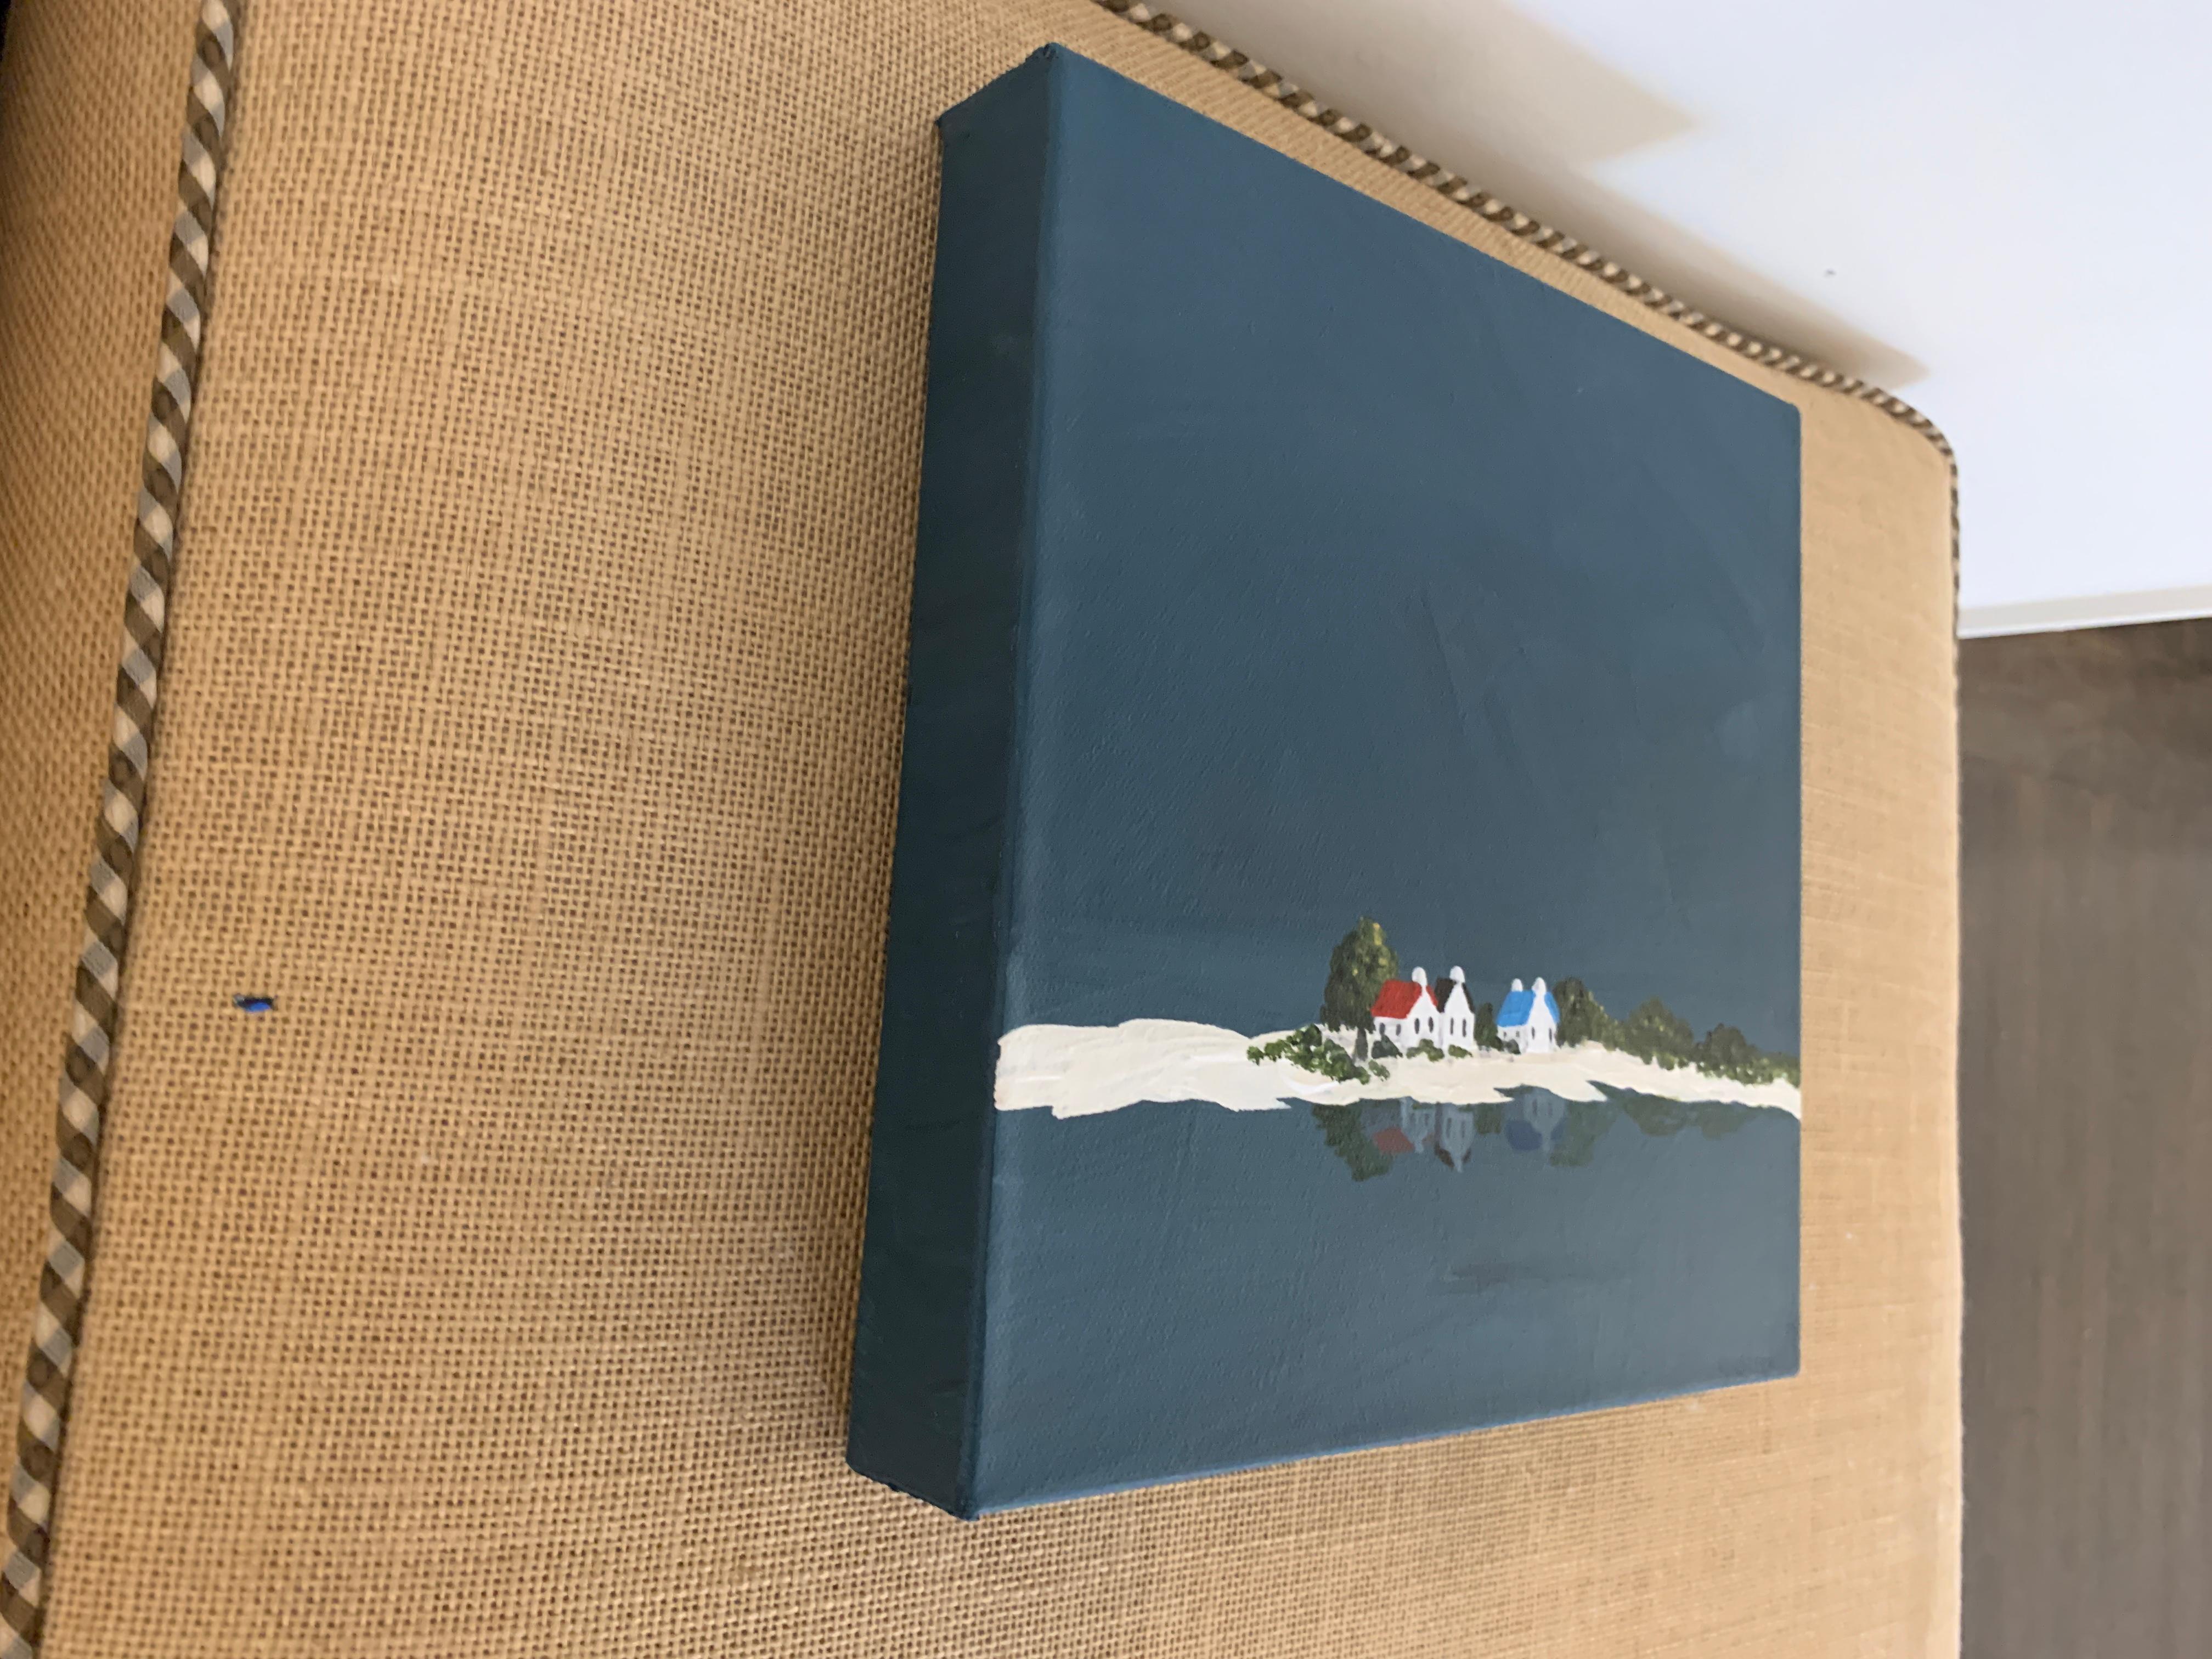 Village XIII by Susan Kinsella, Small Acrylic Contemporary Coastal Painting 4